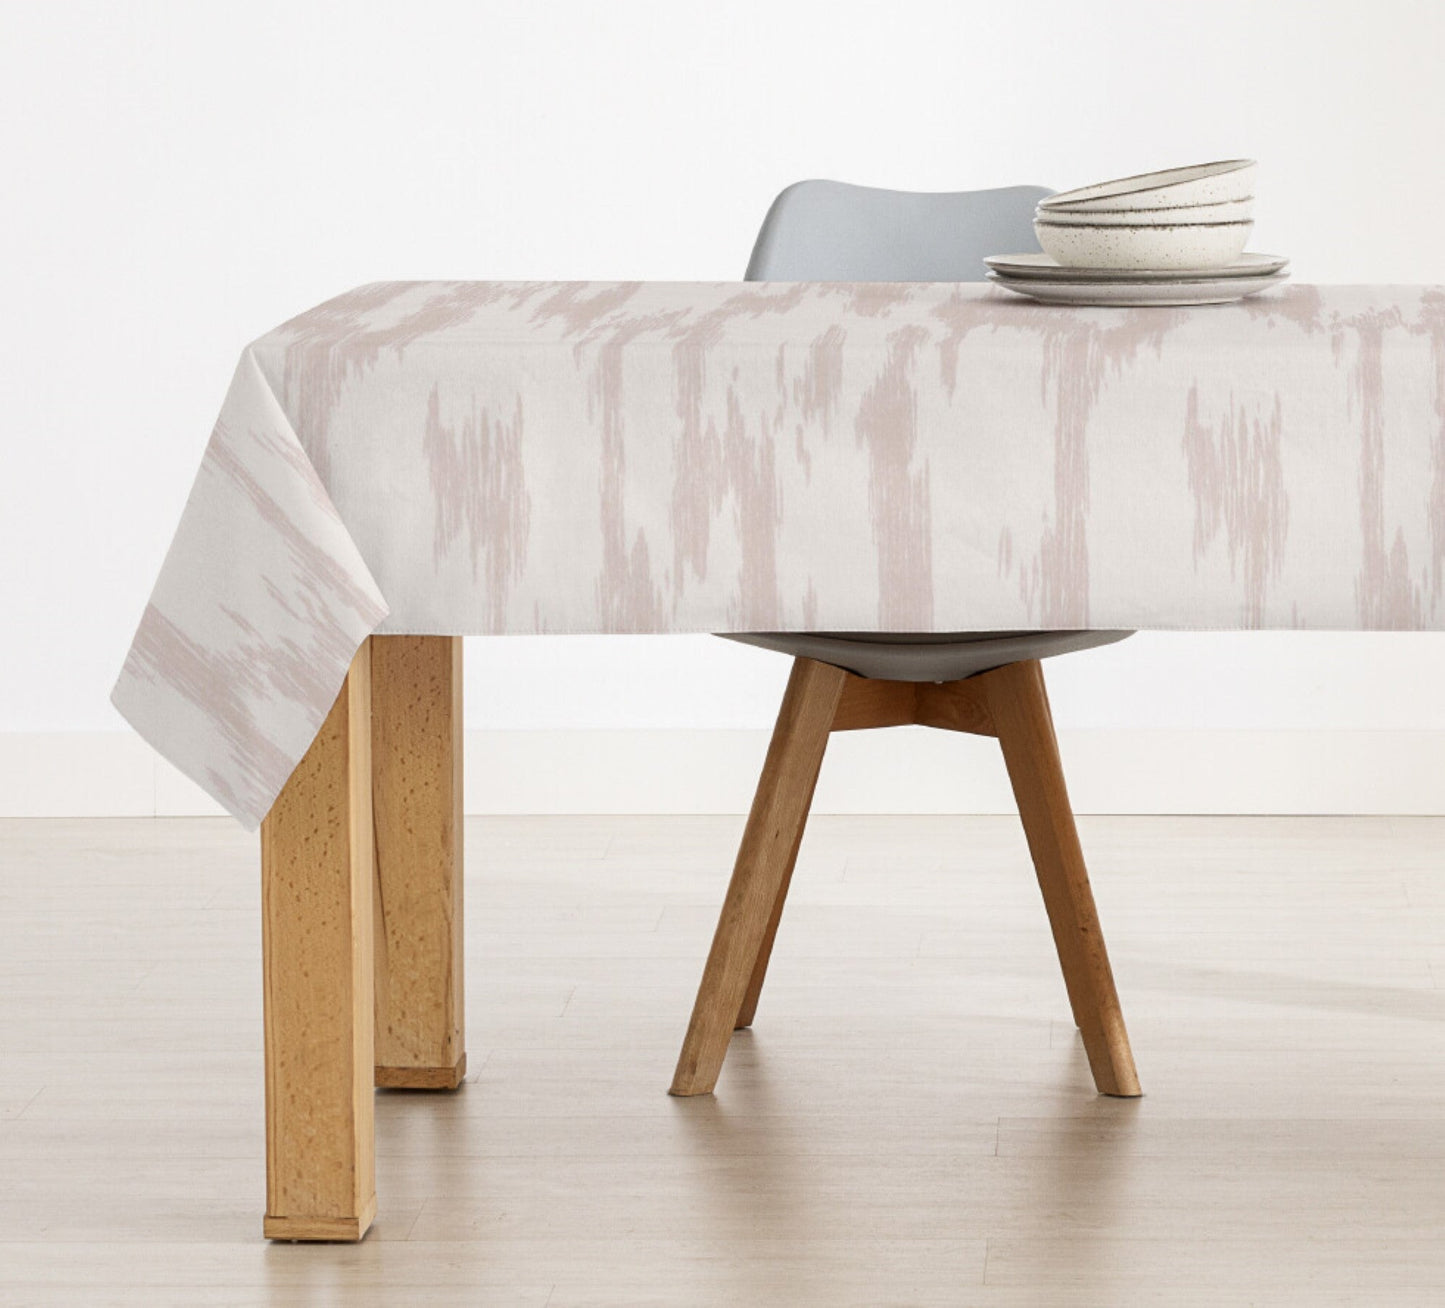 100% cotton tablecloth 0120-332